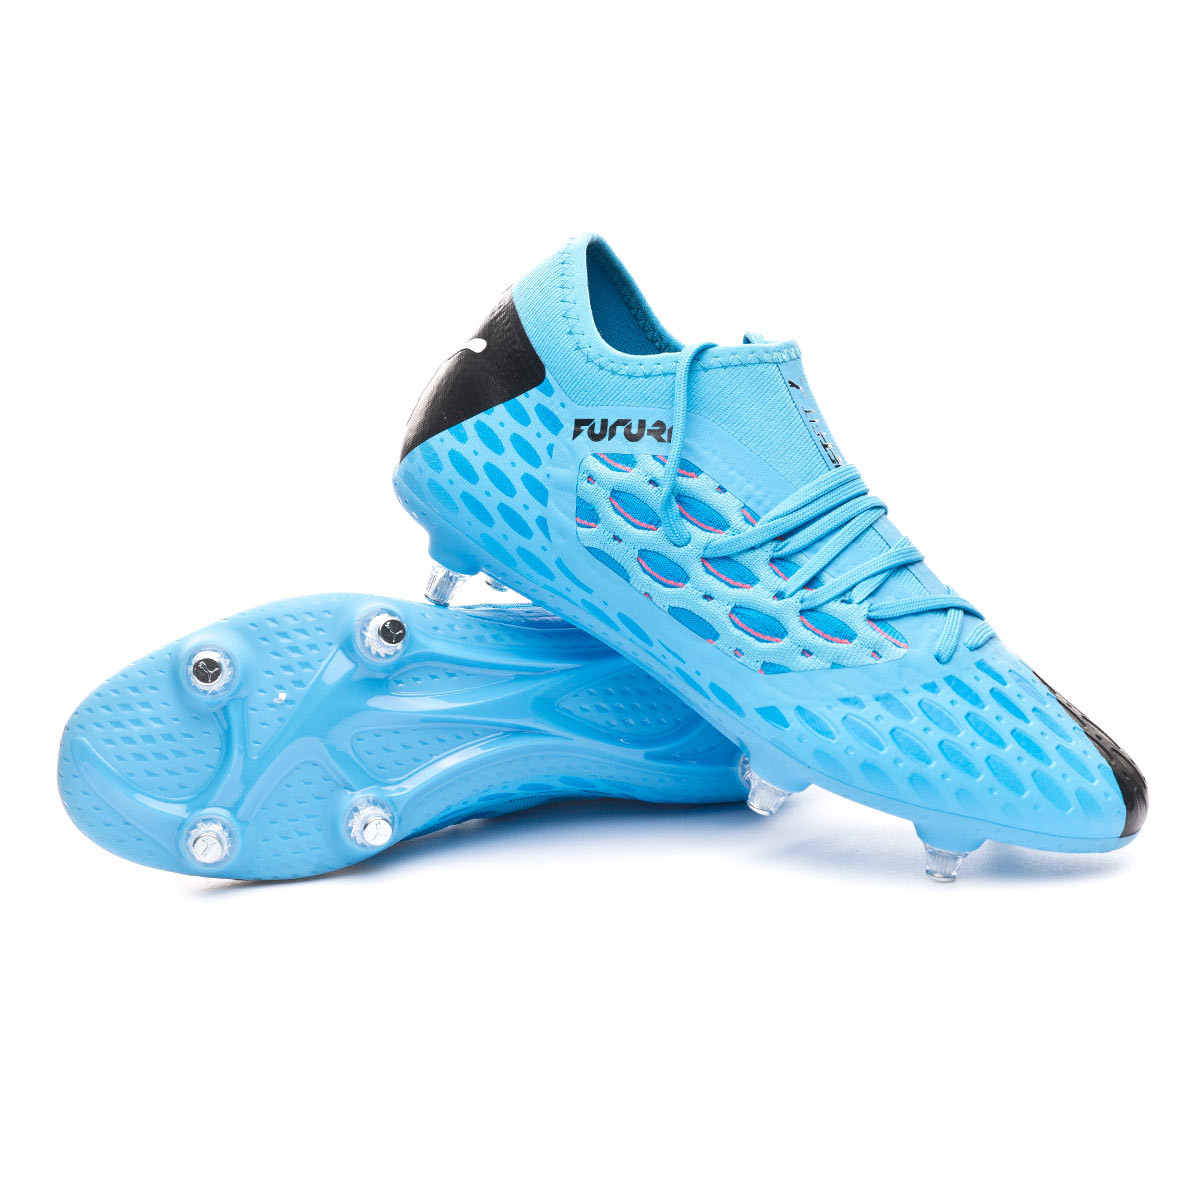 Football Boots Puma Future 5 3 Netfit Sg Luminous Blue Nrgy Blue Puma Black Pink Alert Futbol Emotion